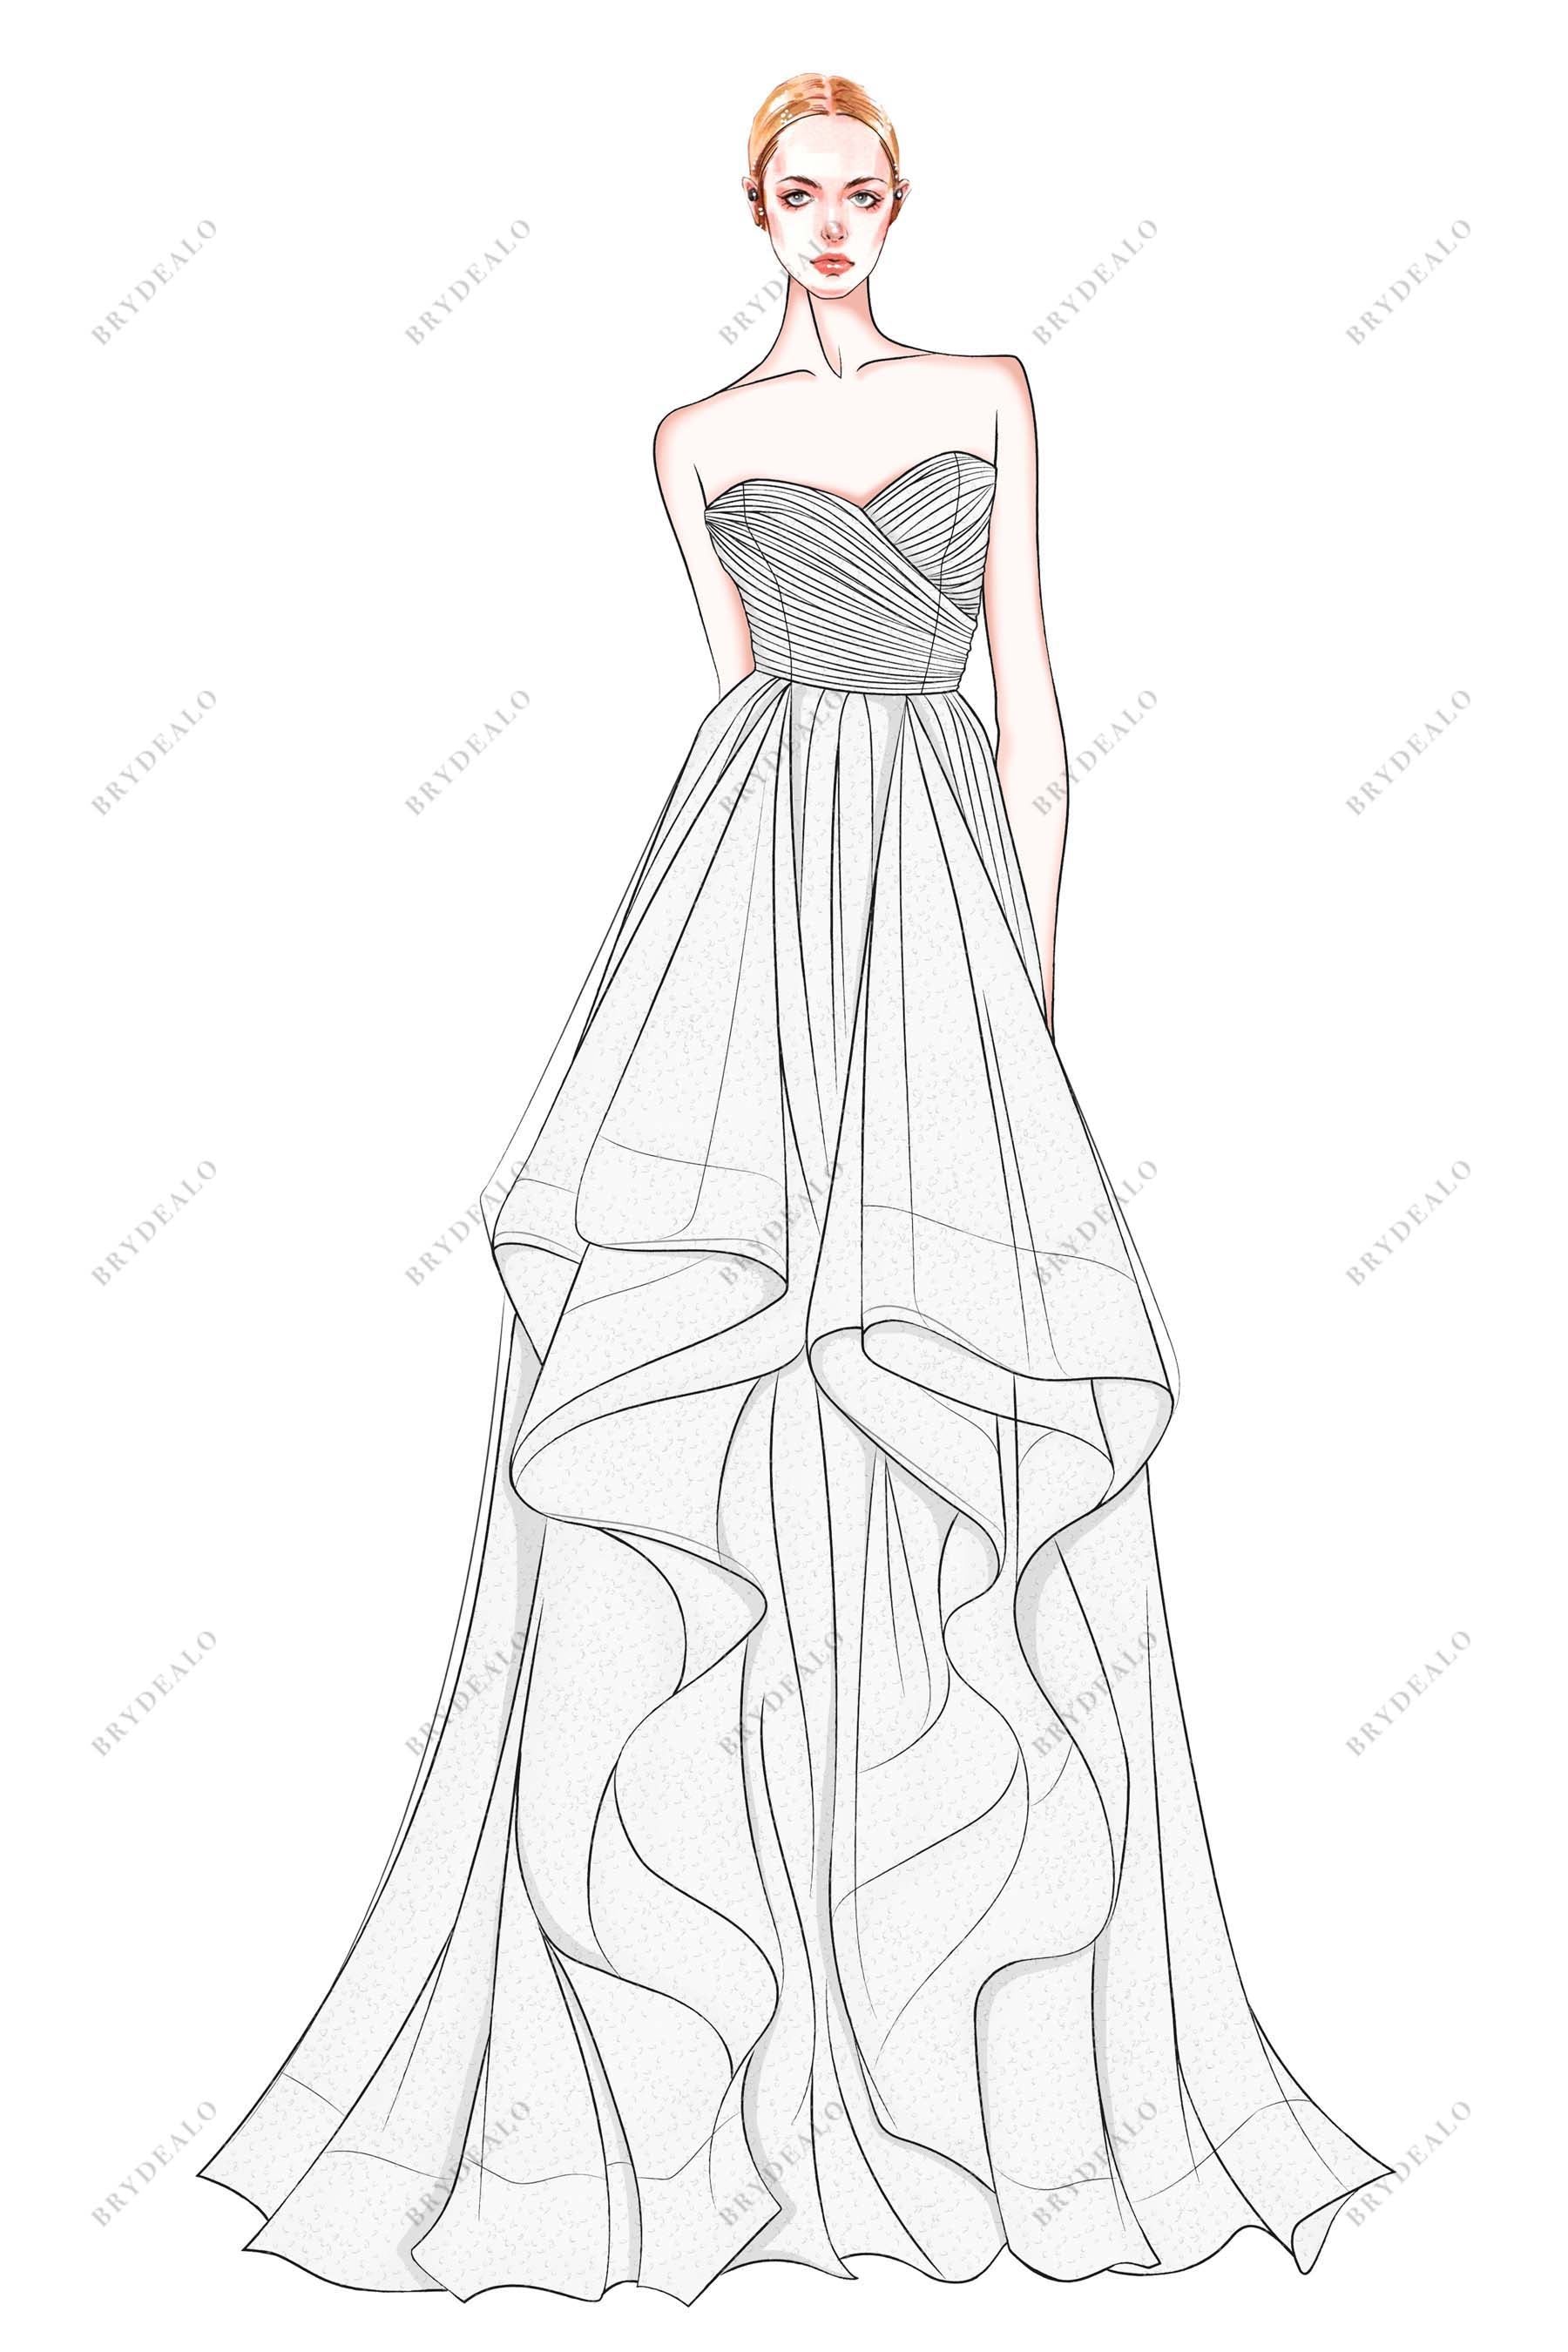 Custom-made Pleated Sweetheart Neck Wedding Dress Sketch